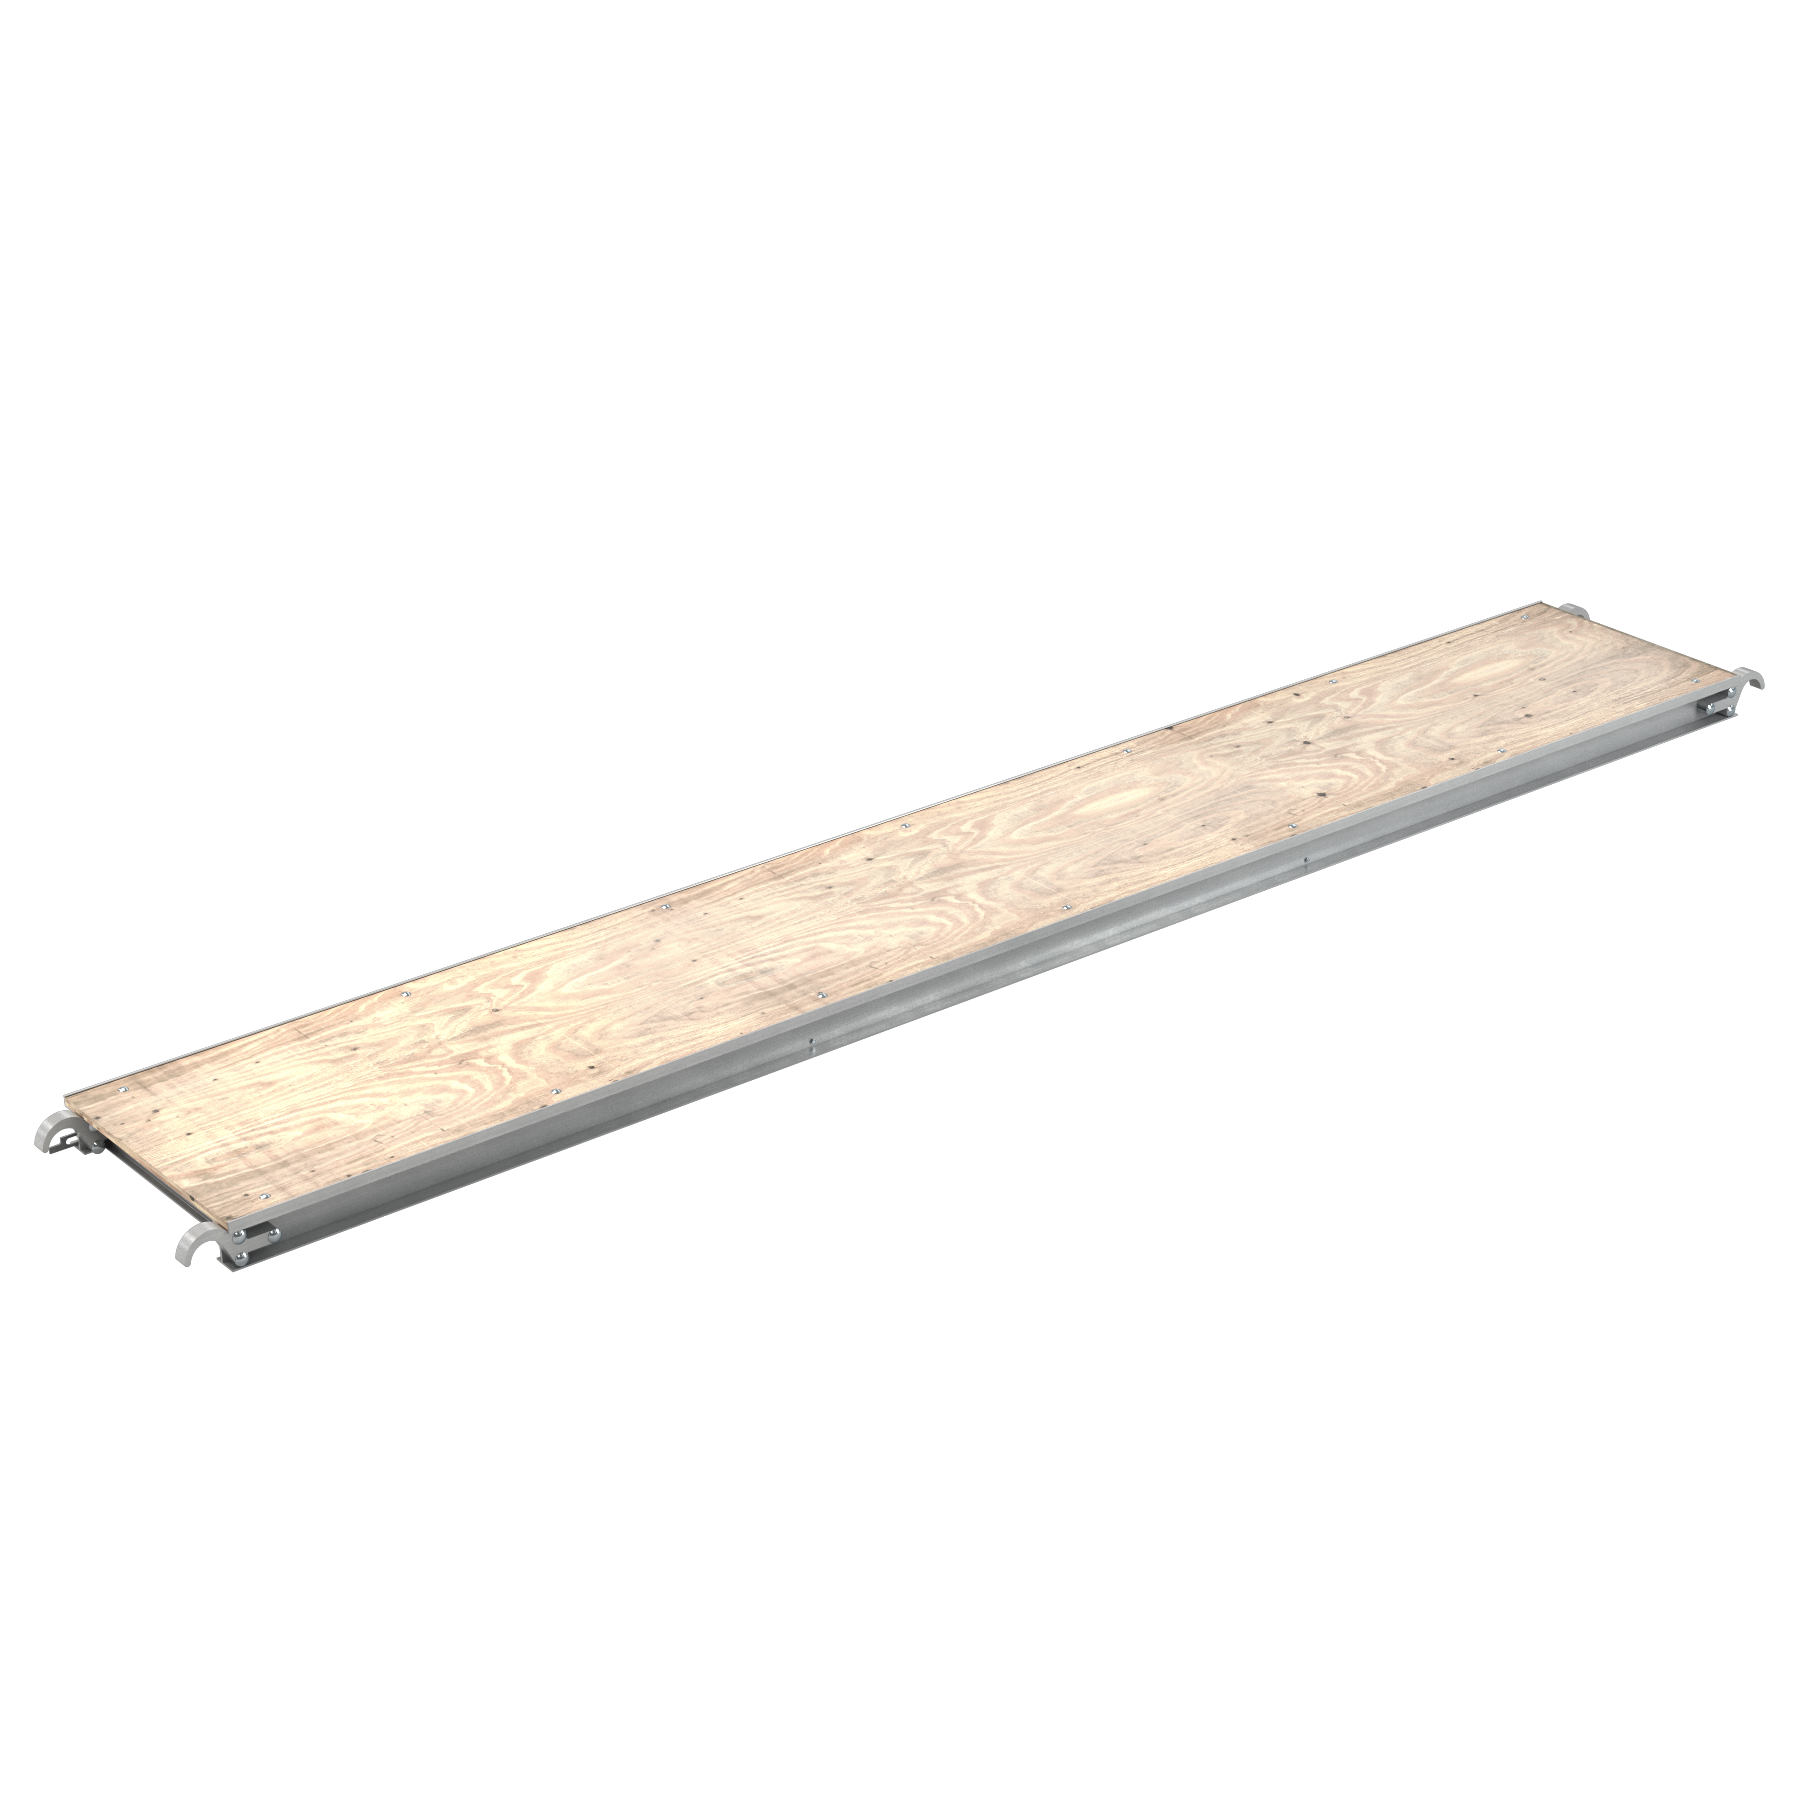 wood plank scaffold weight